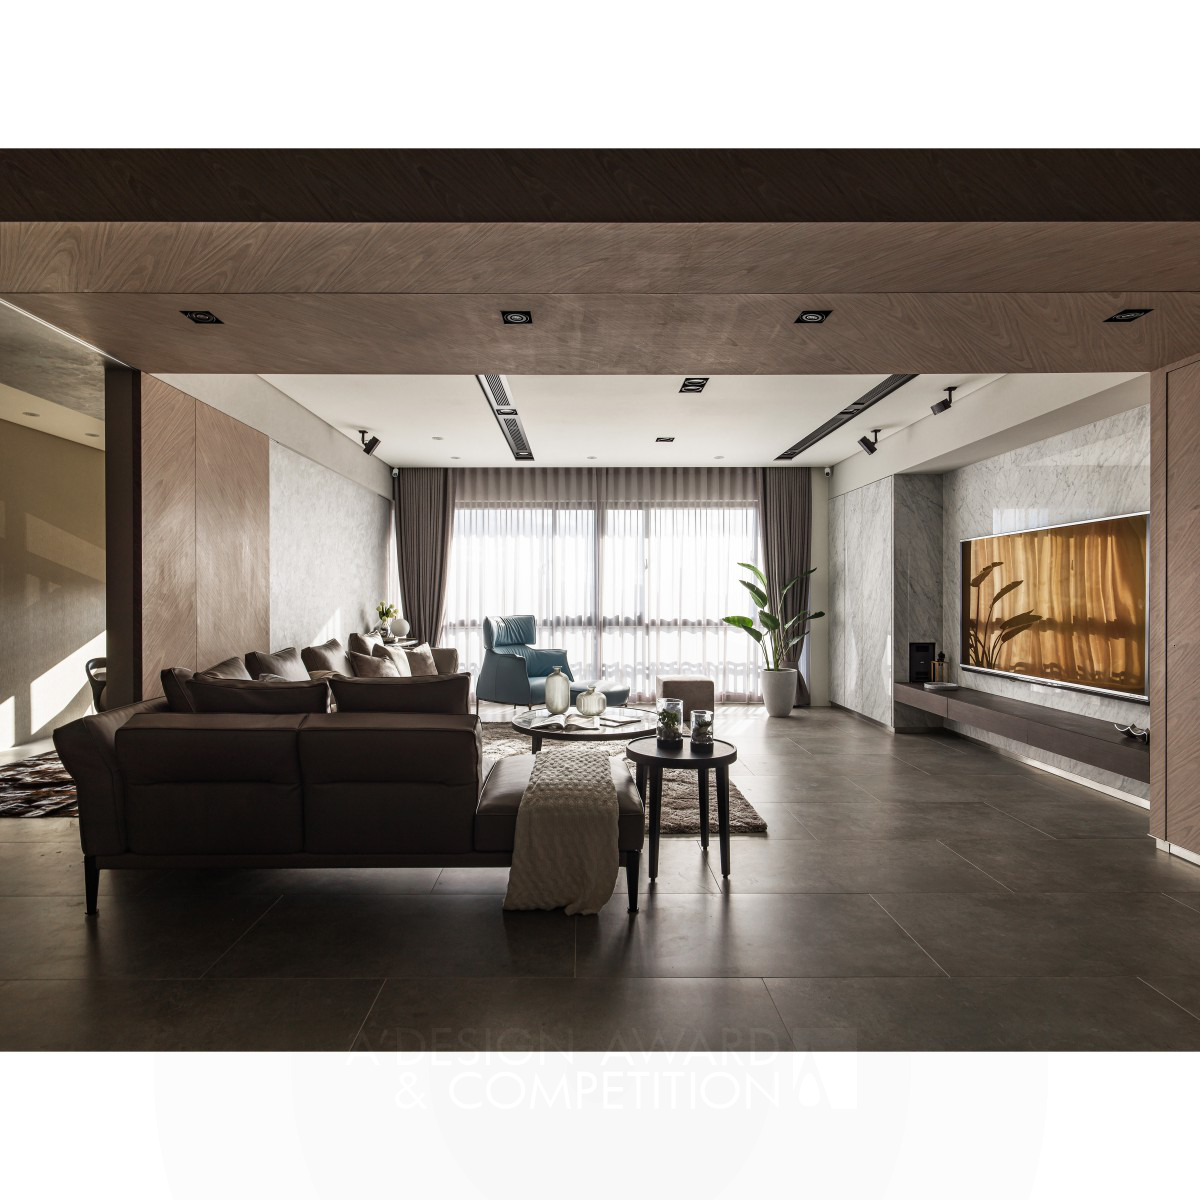 Grayscale Residential Space by MA  KAI CHUN